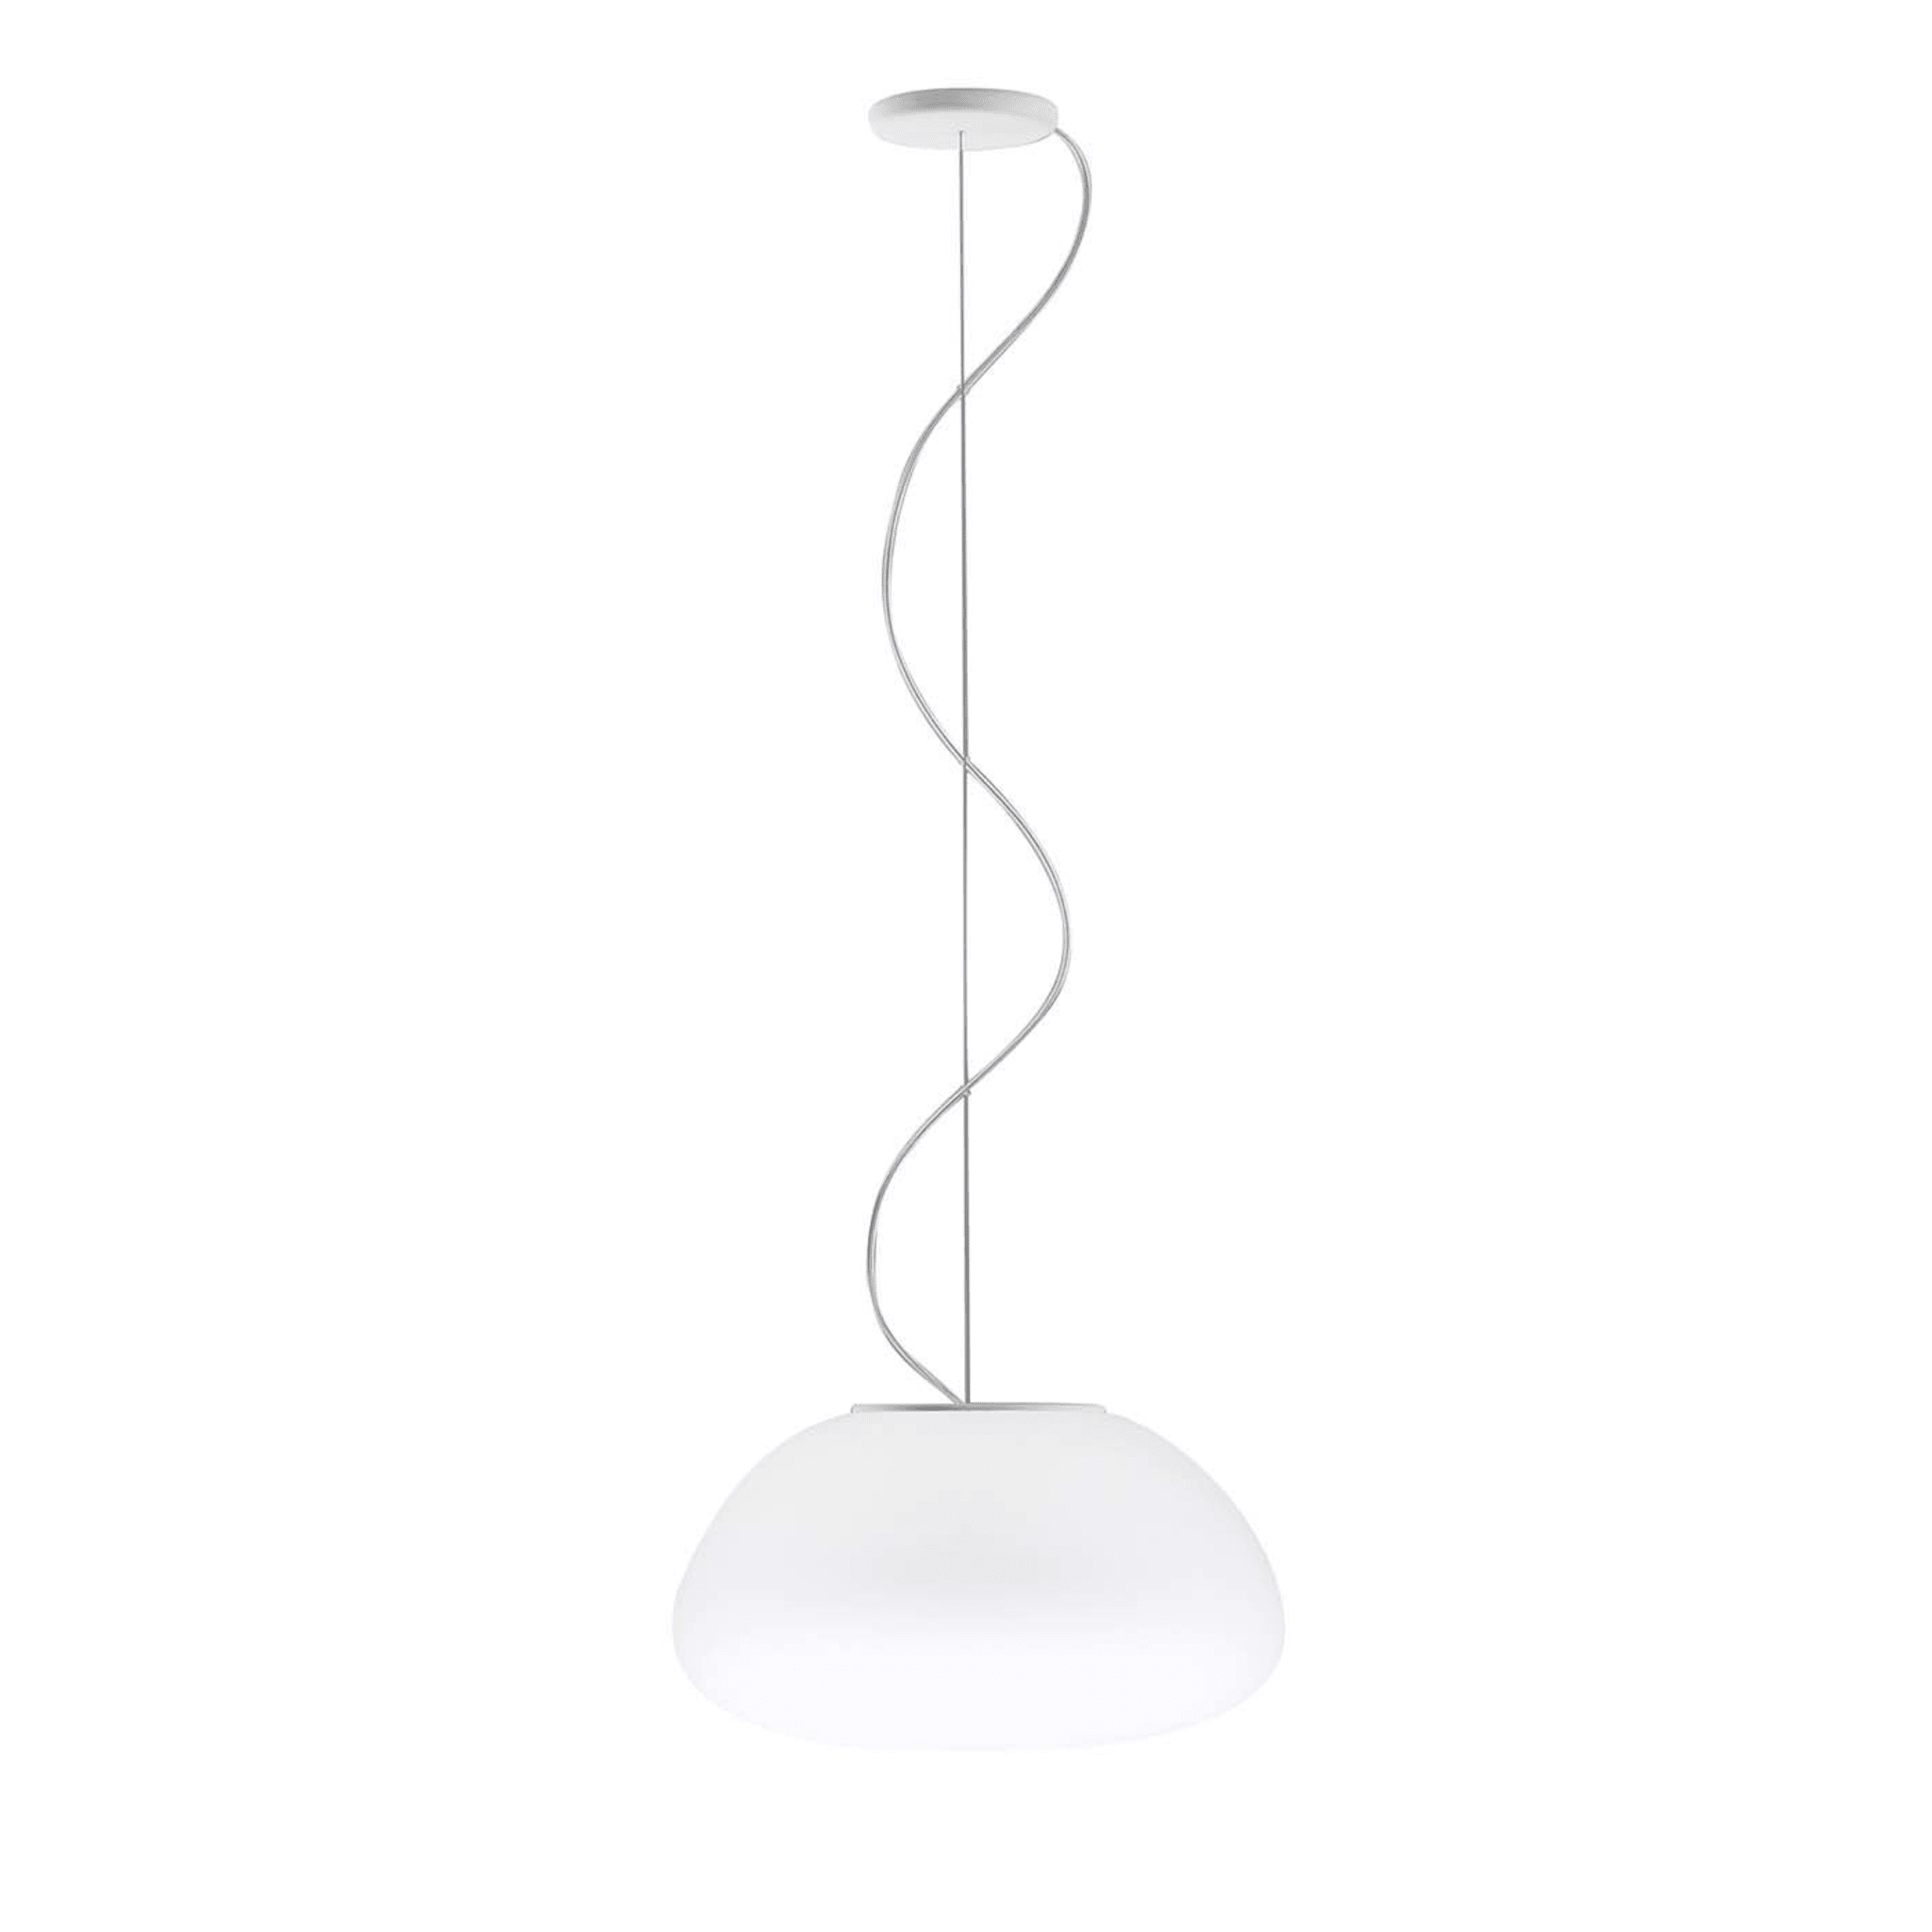 Lumi Poga Pendant Lamp by Saggia & Sommella - Main view